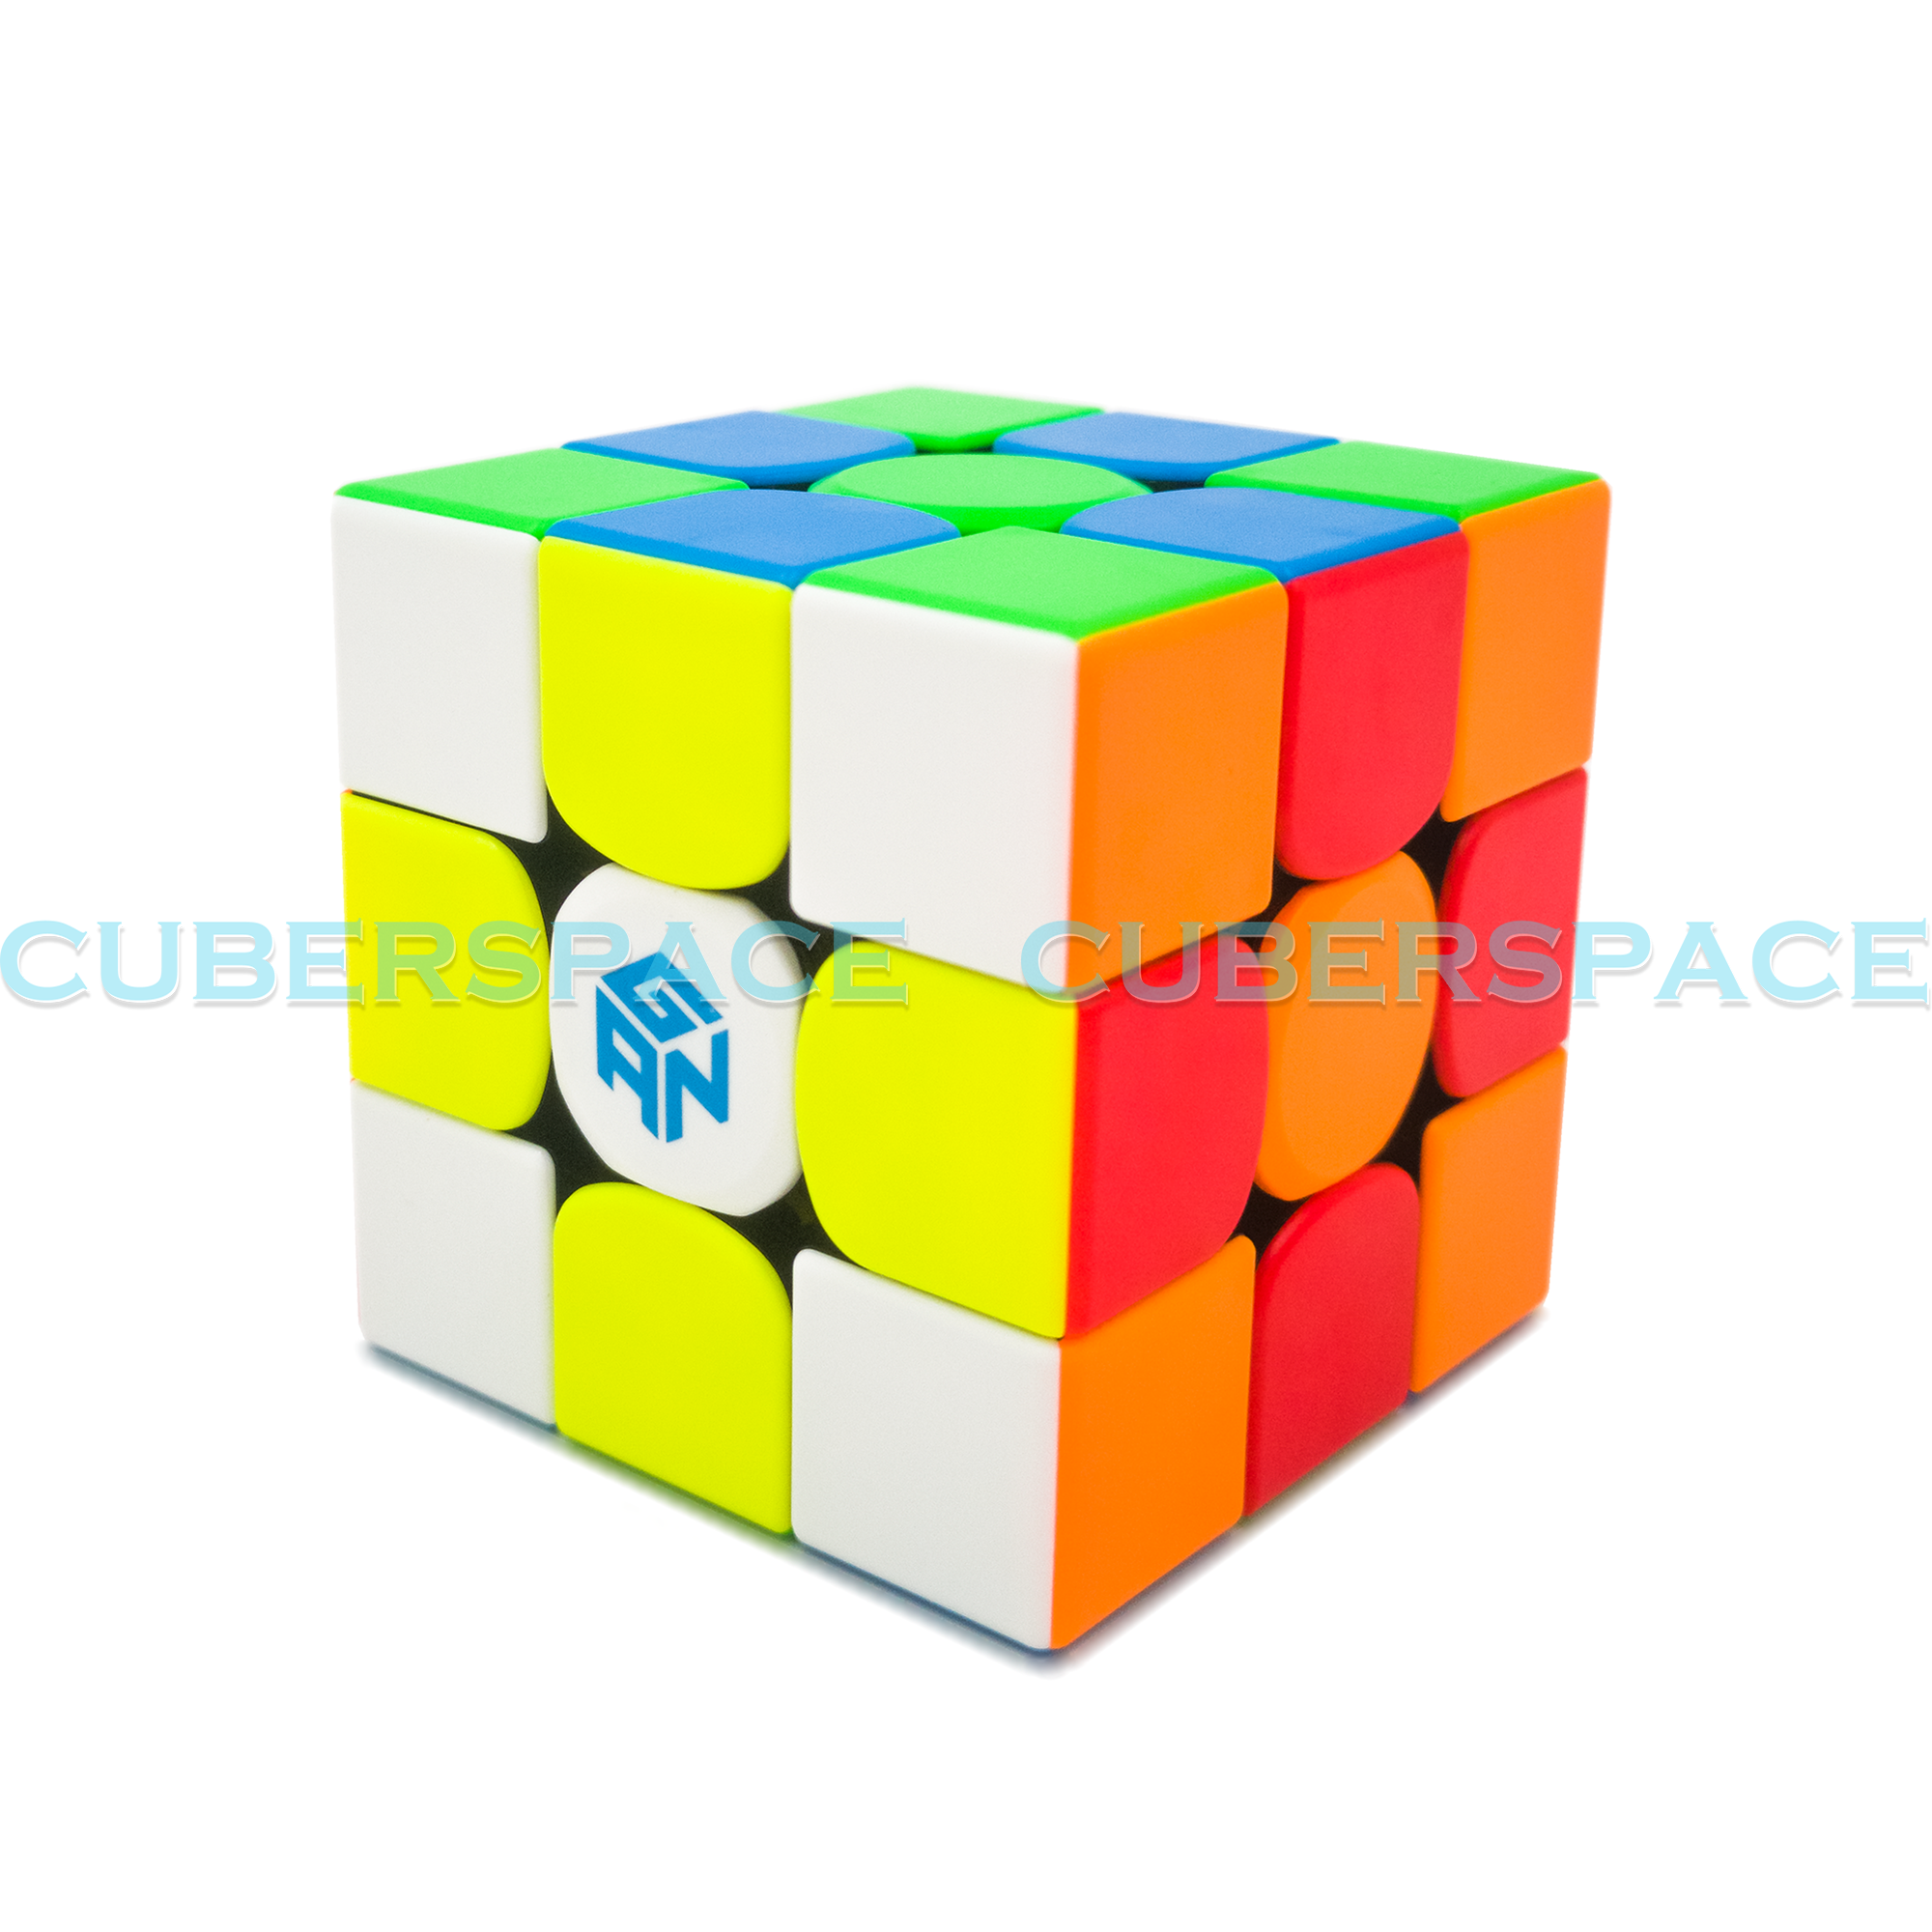 GAN 356 RS - CuberSpace - Speedcube - Singapore